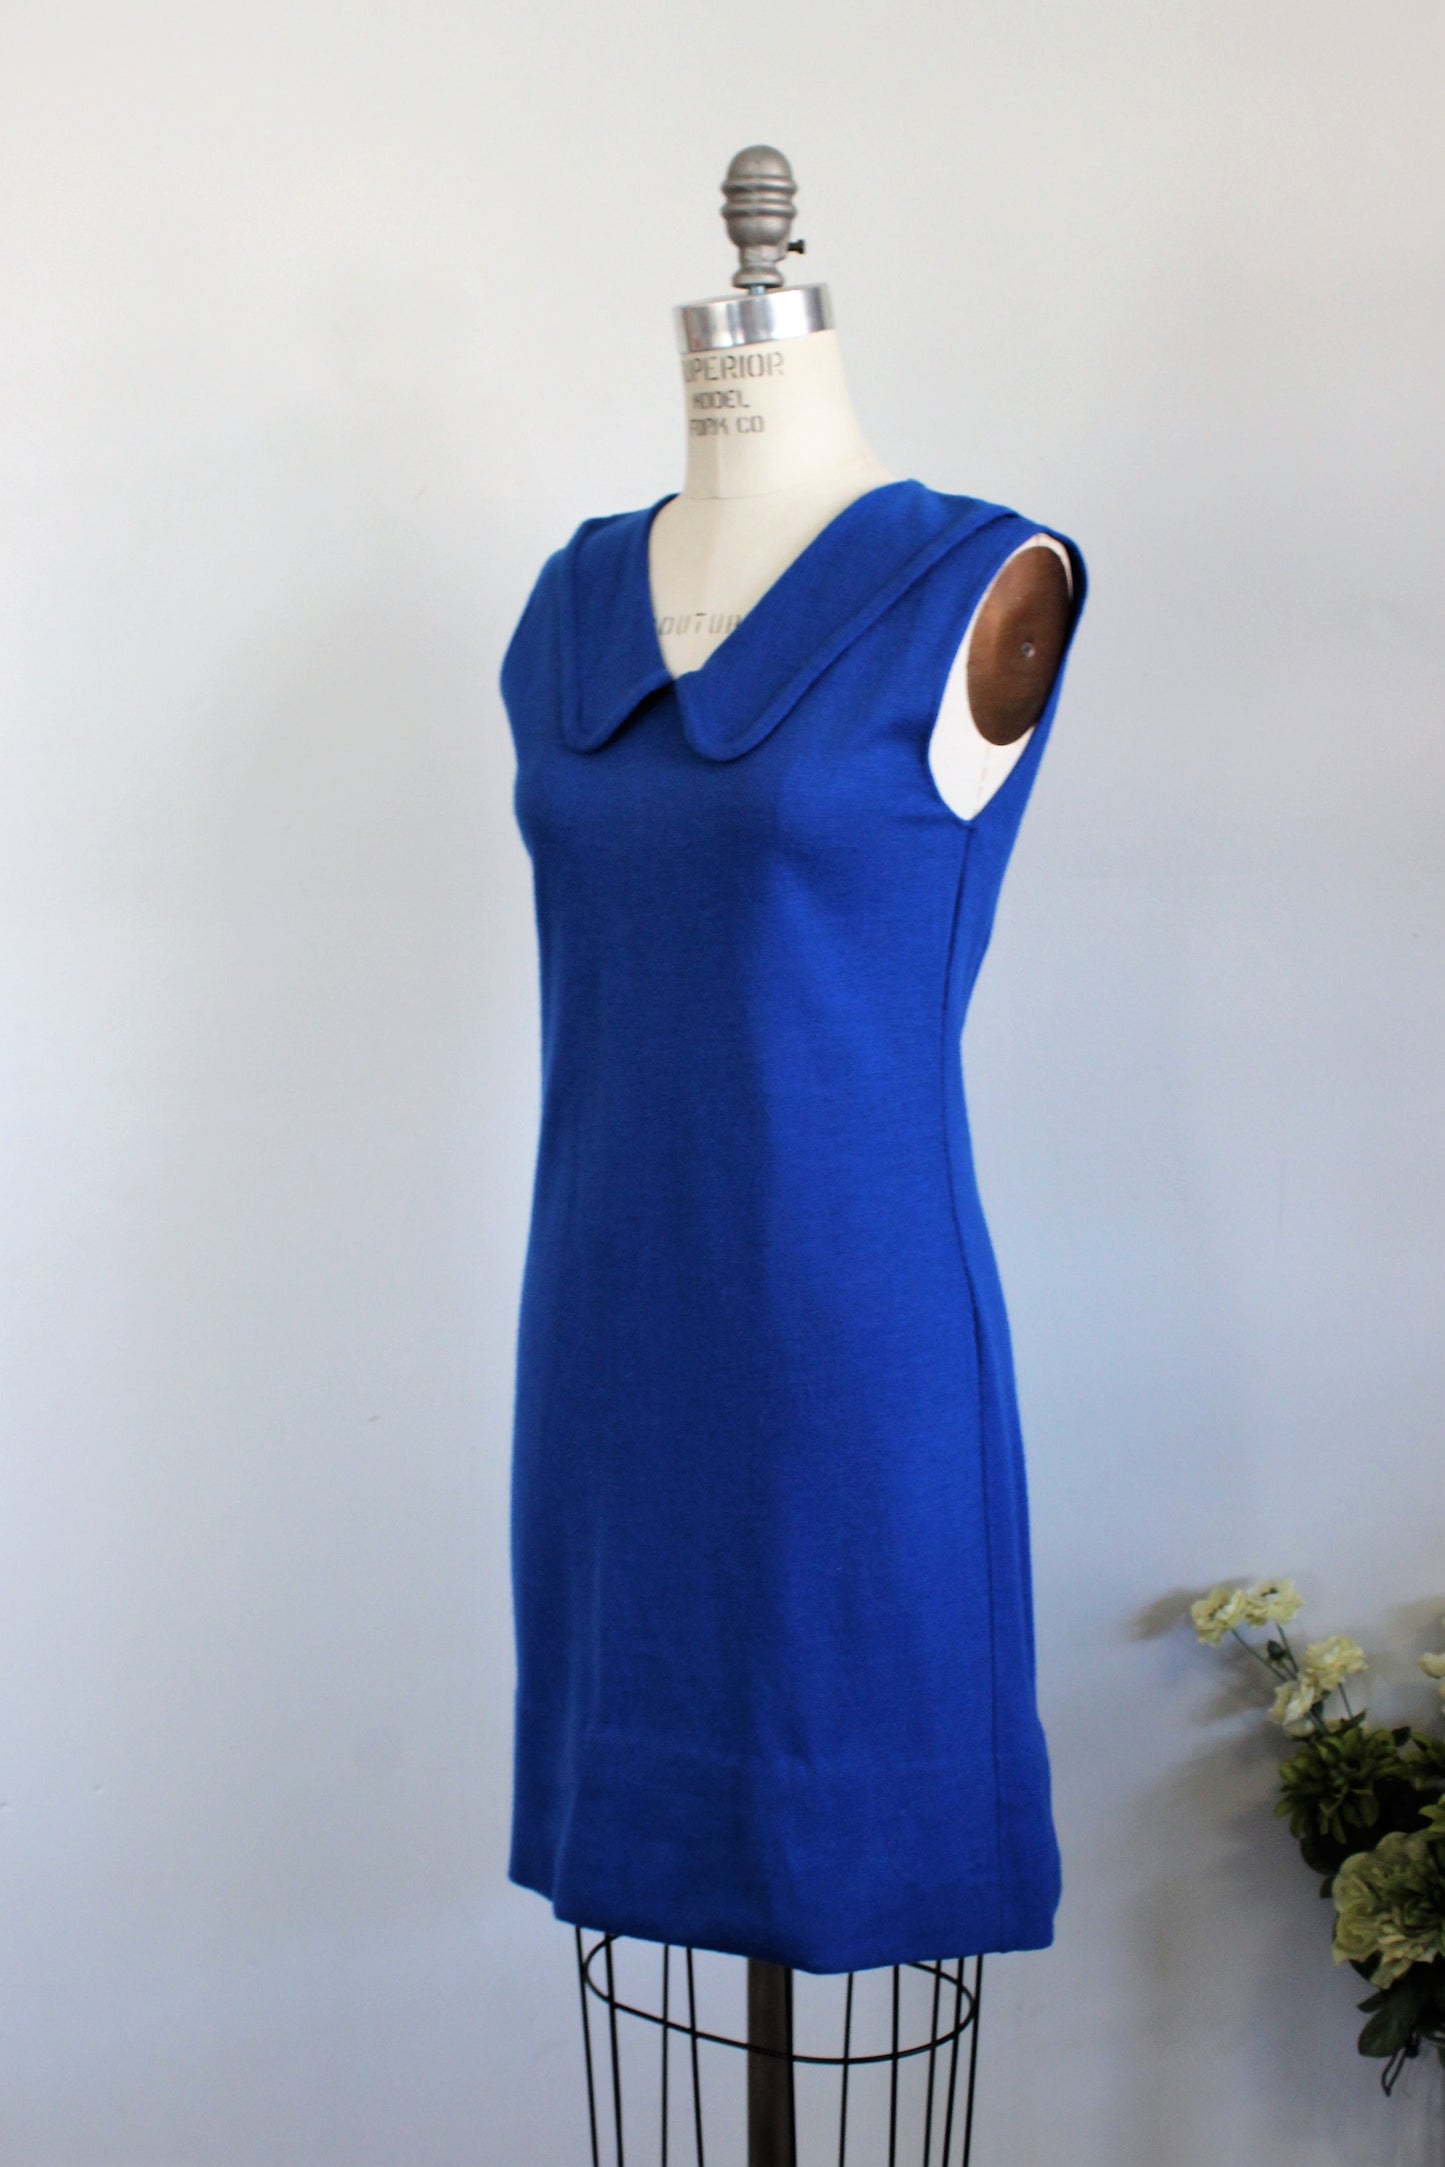 Vintage 1960s Blue Mod Dress